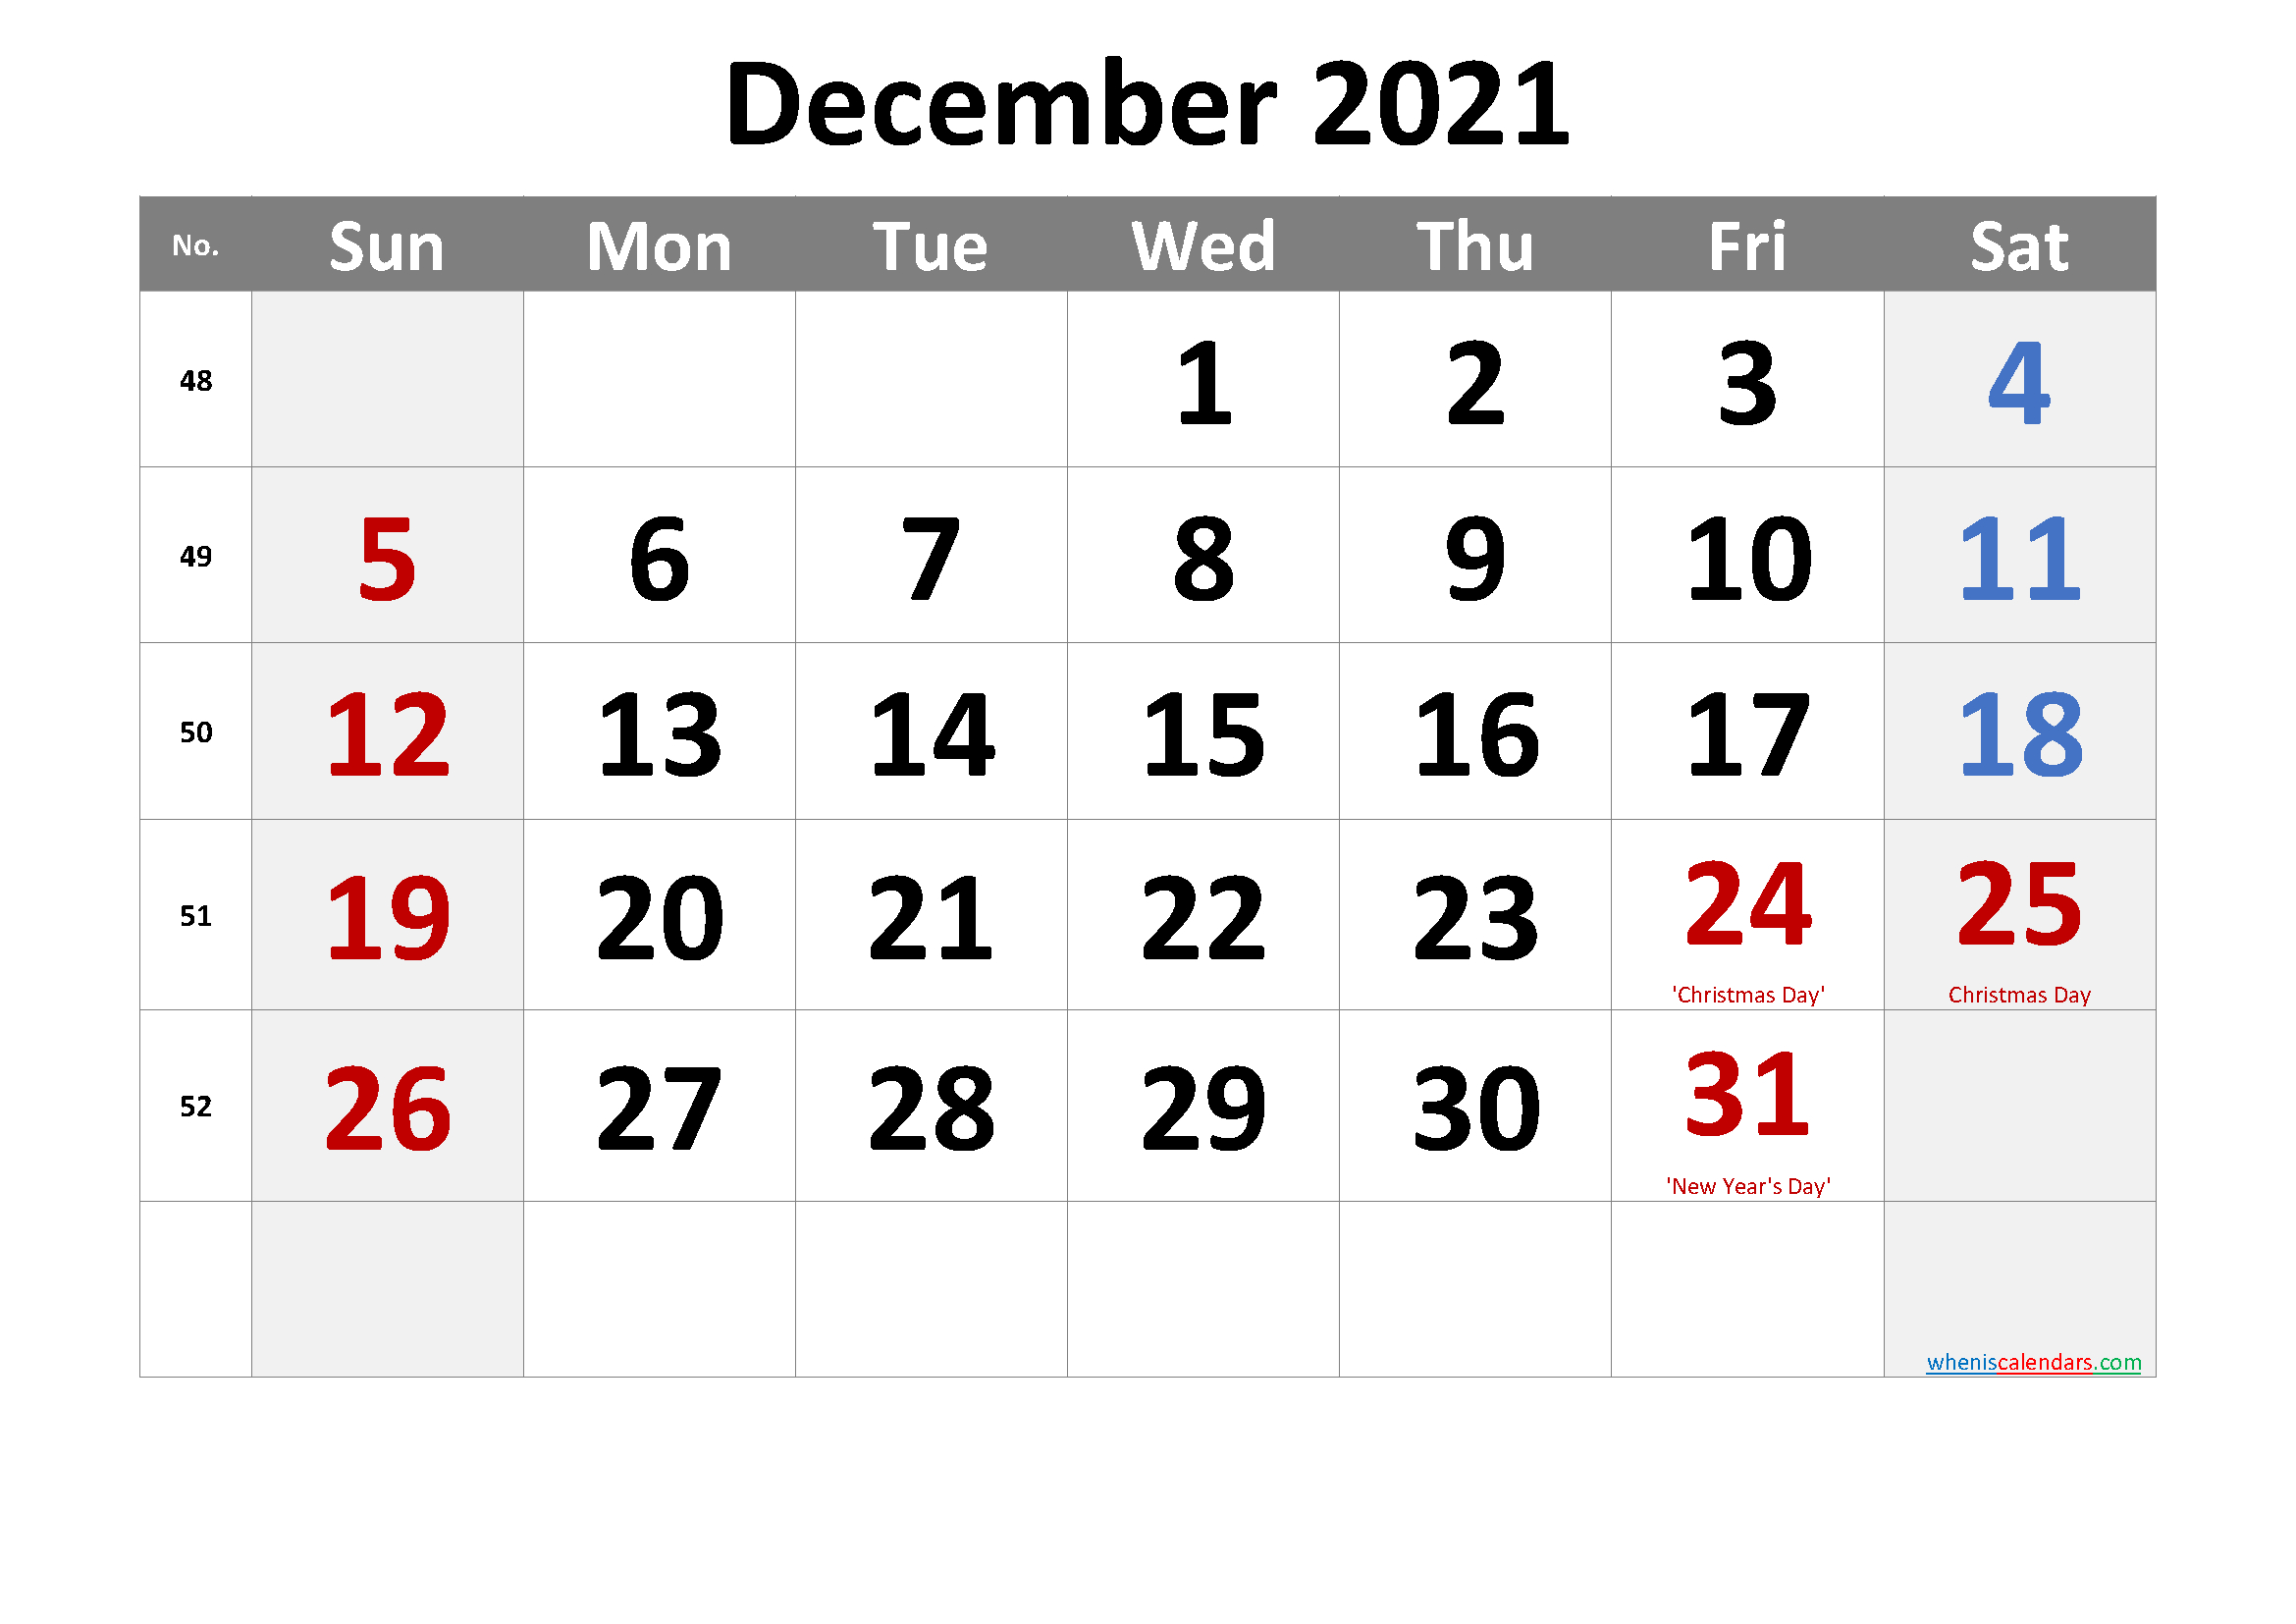 December 2021 Printable Calendar With Holidays - 6 Templates Free Printable December 2021 Calendar